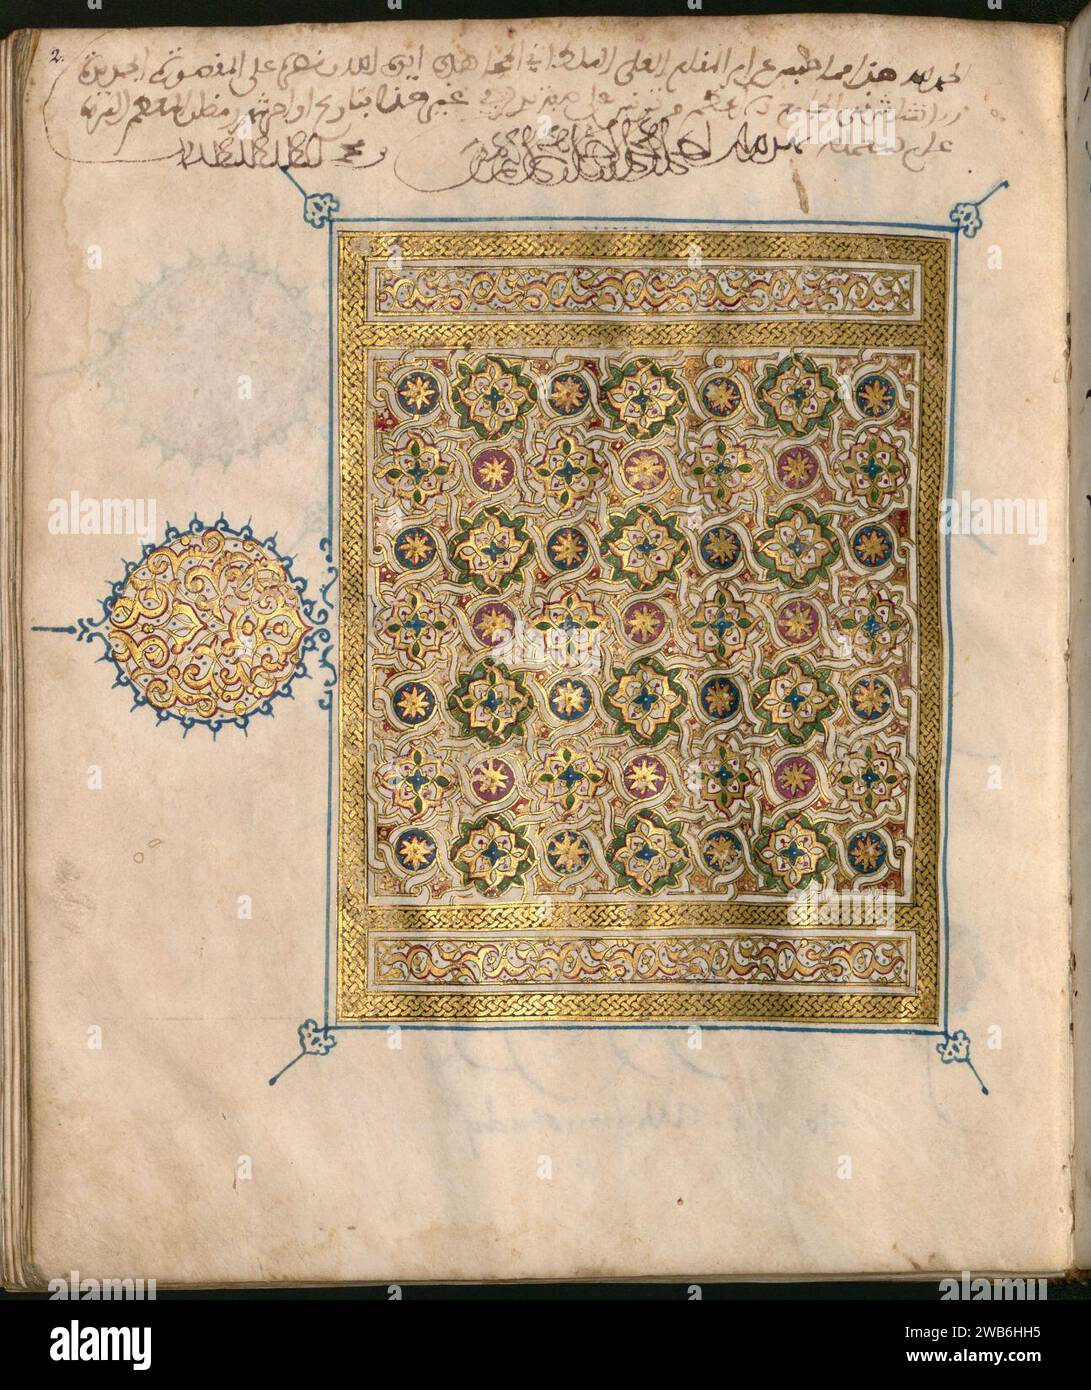 1306 corano Abu Yusuf Yaqub pagina 2 wasserzeichen-projekte. Foto Stock